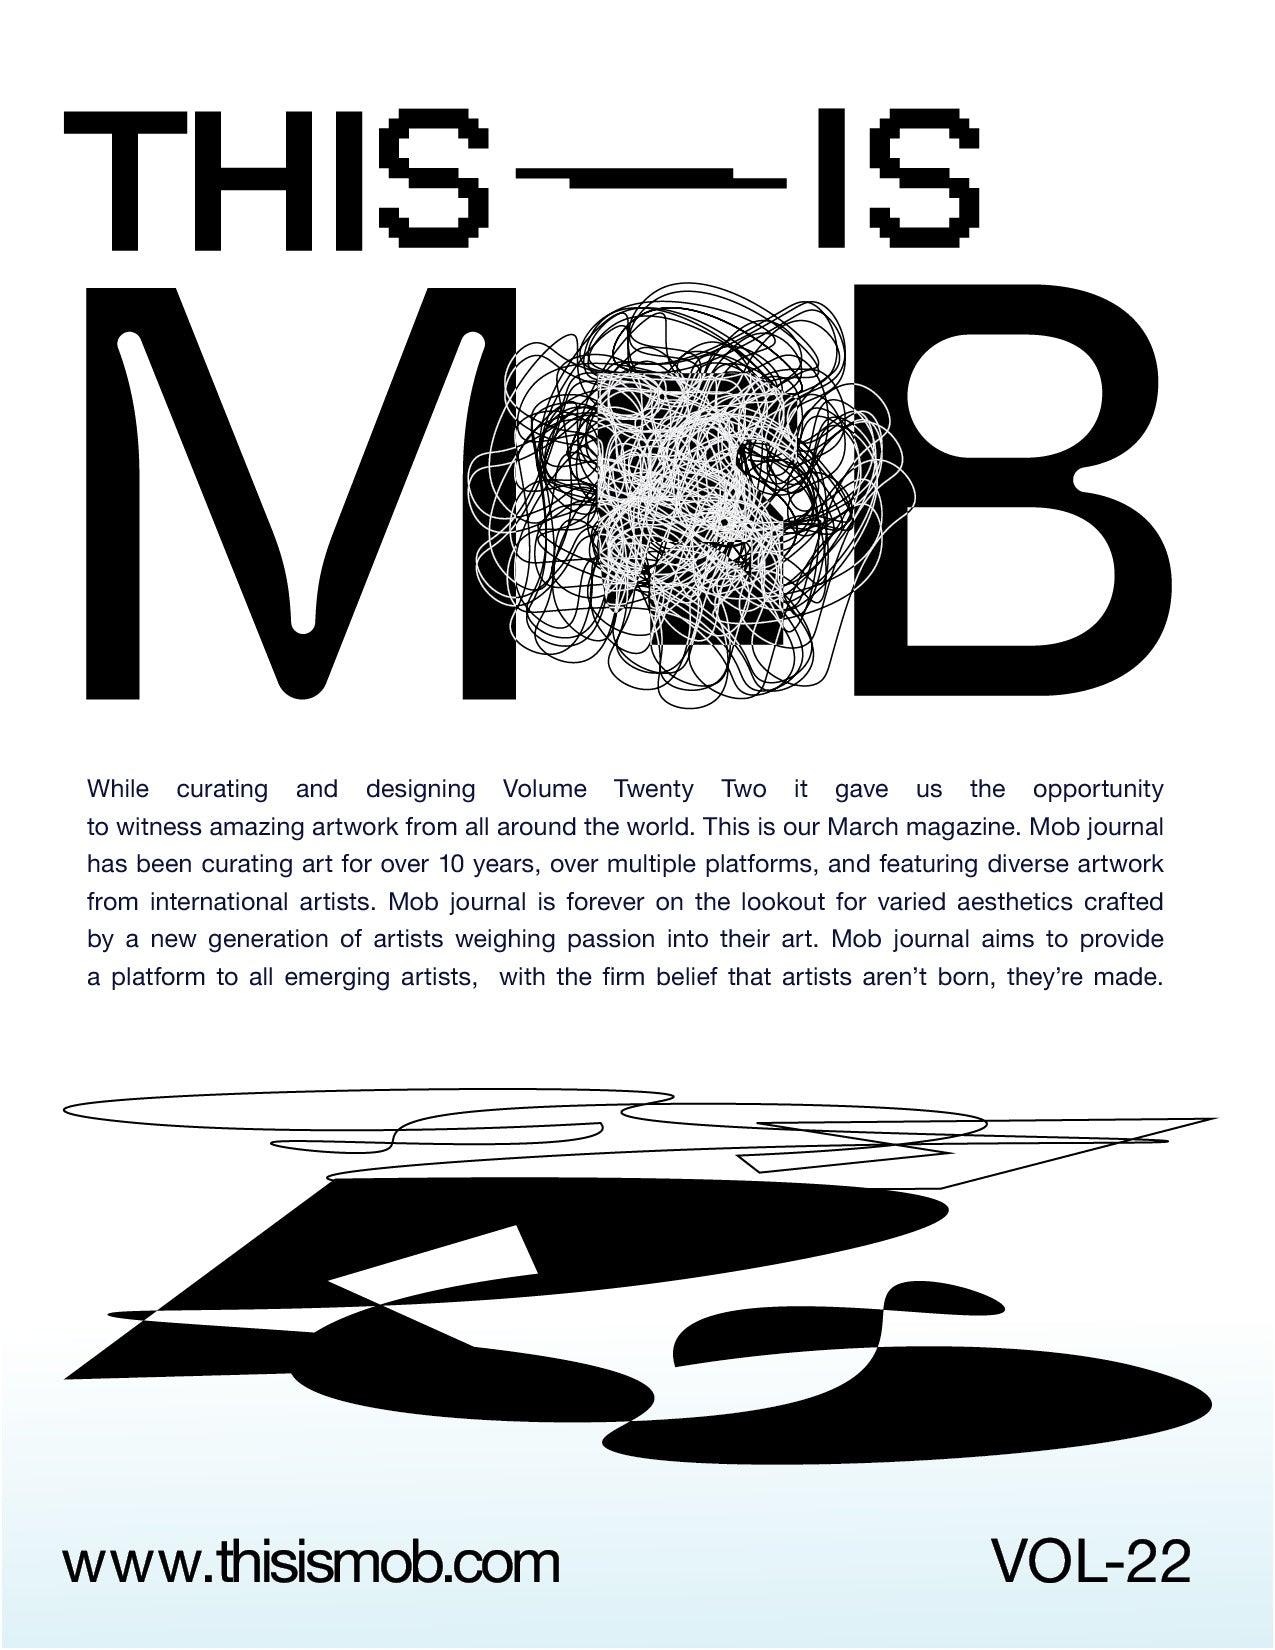 MOB JOURNAL | VOLUME TWENTY TWO | ISSUE #17 - Mob Journal